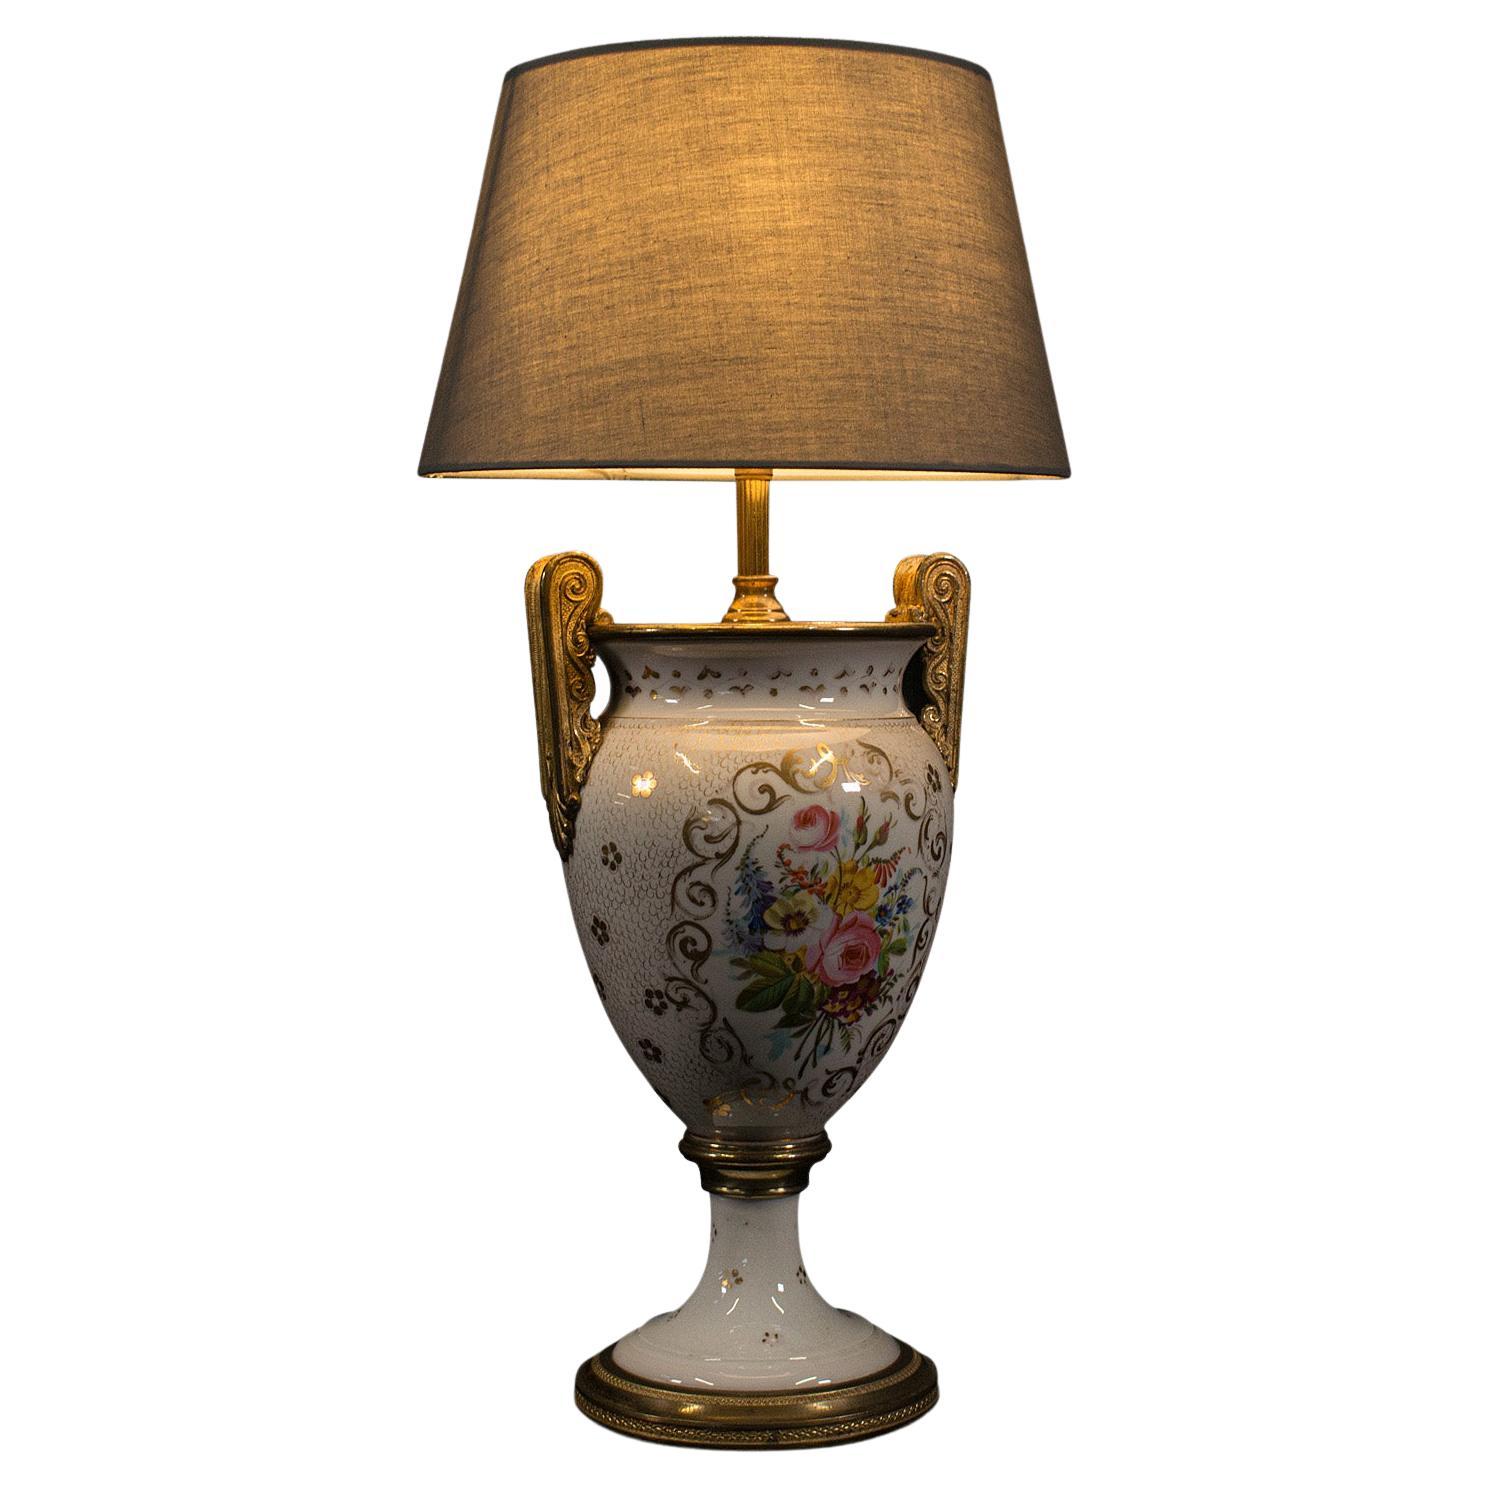 Vintage Decorative Table Lamp, French, Ceramic Urn, Ornamental Light, Circa 1970 For Sale